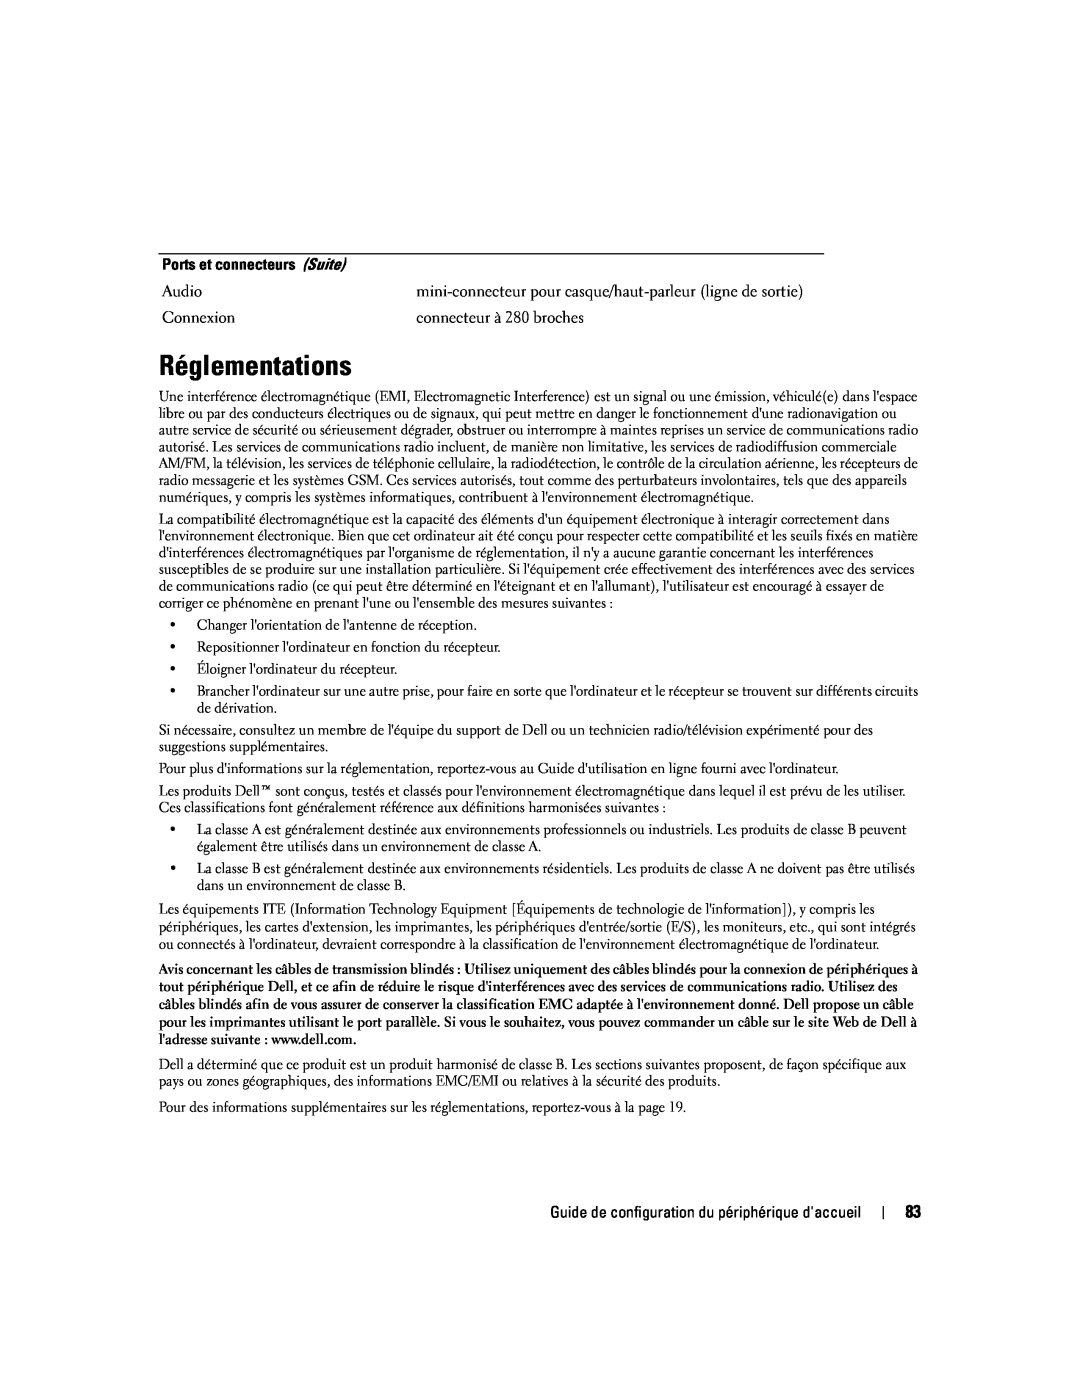 Dell Model PR09S setup guide Réglementations 